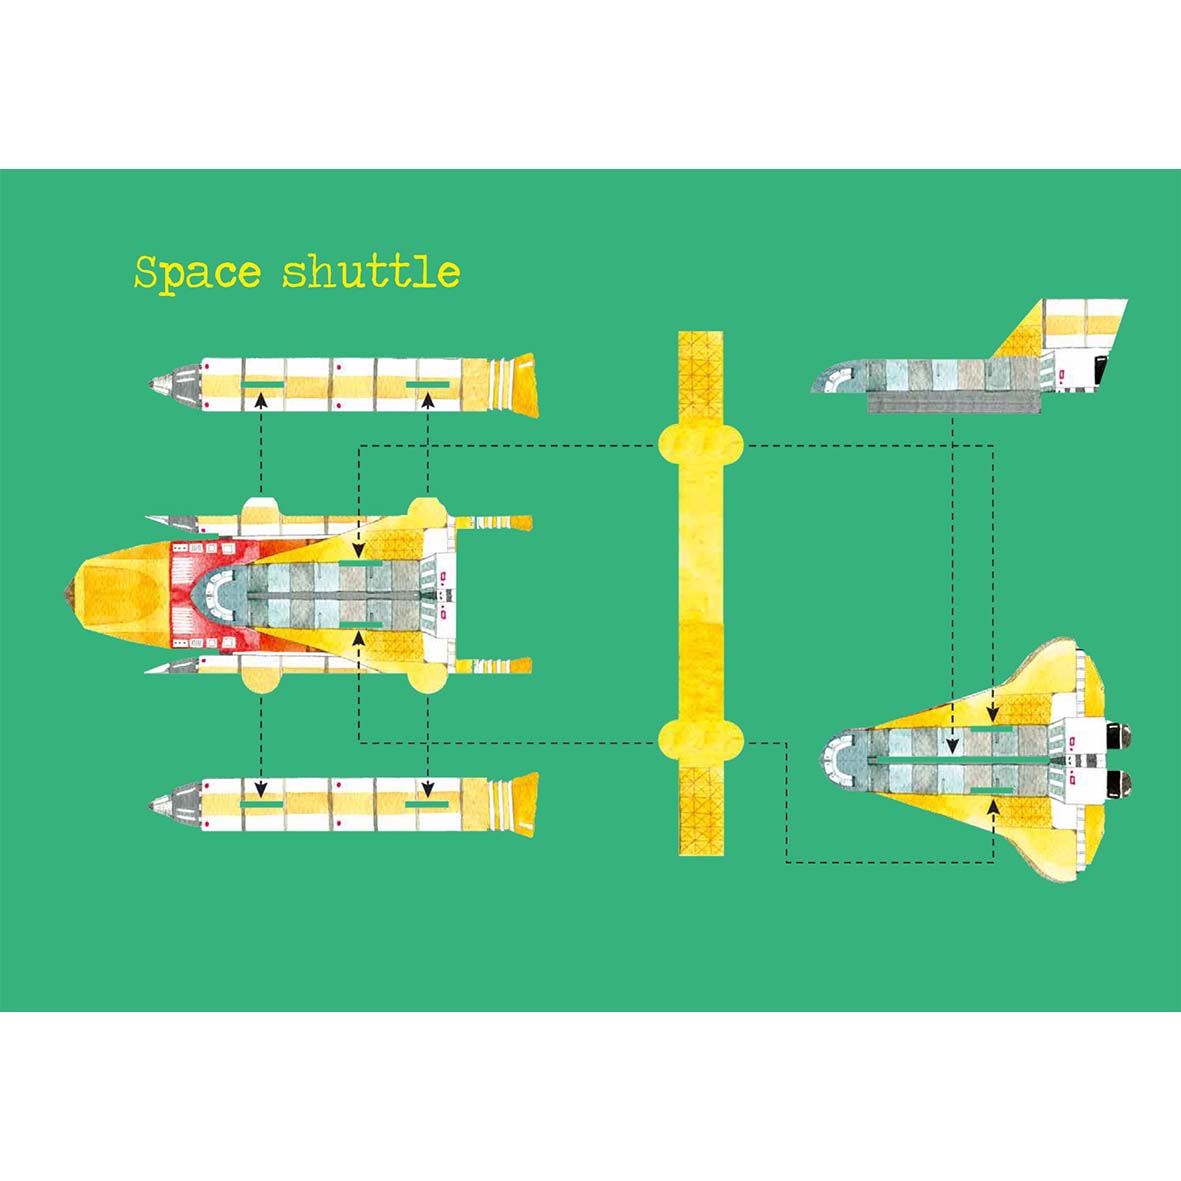 Build in 3D - Spaceships